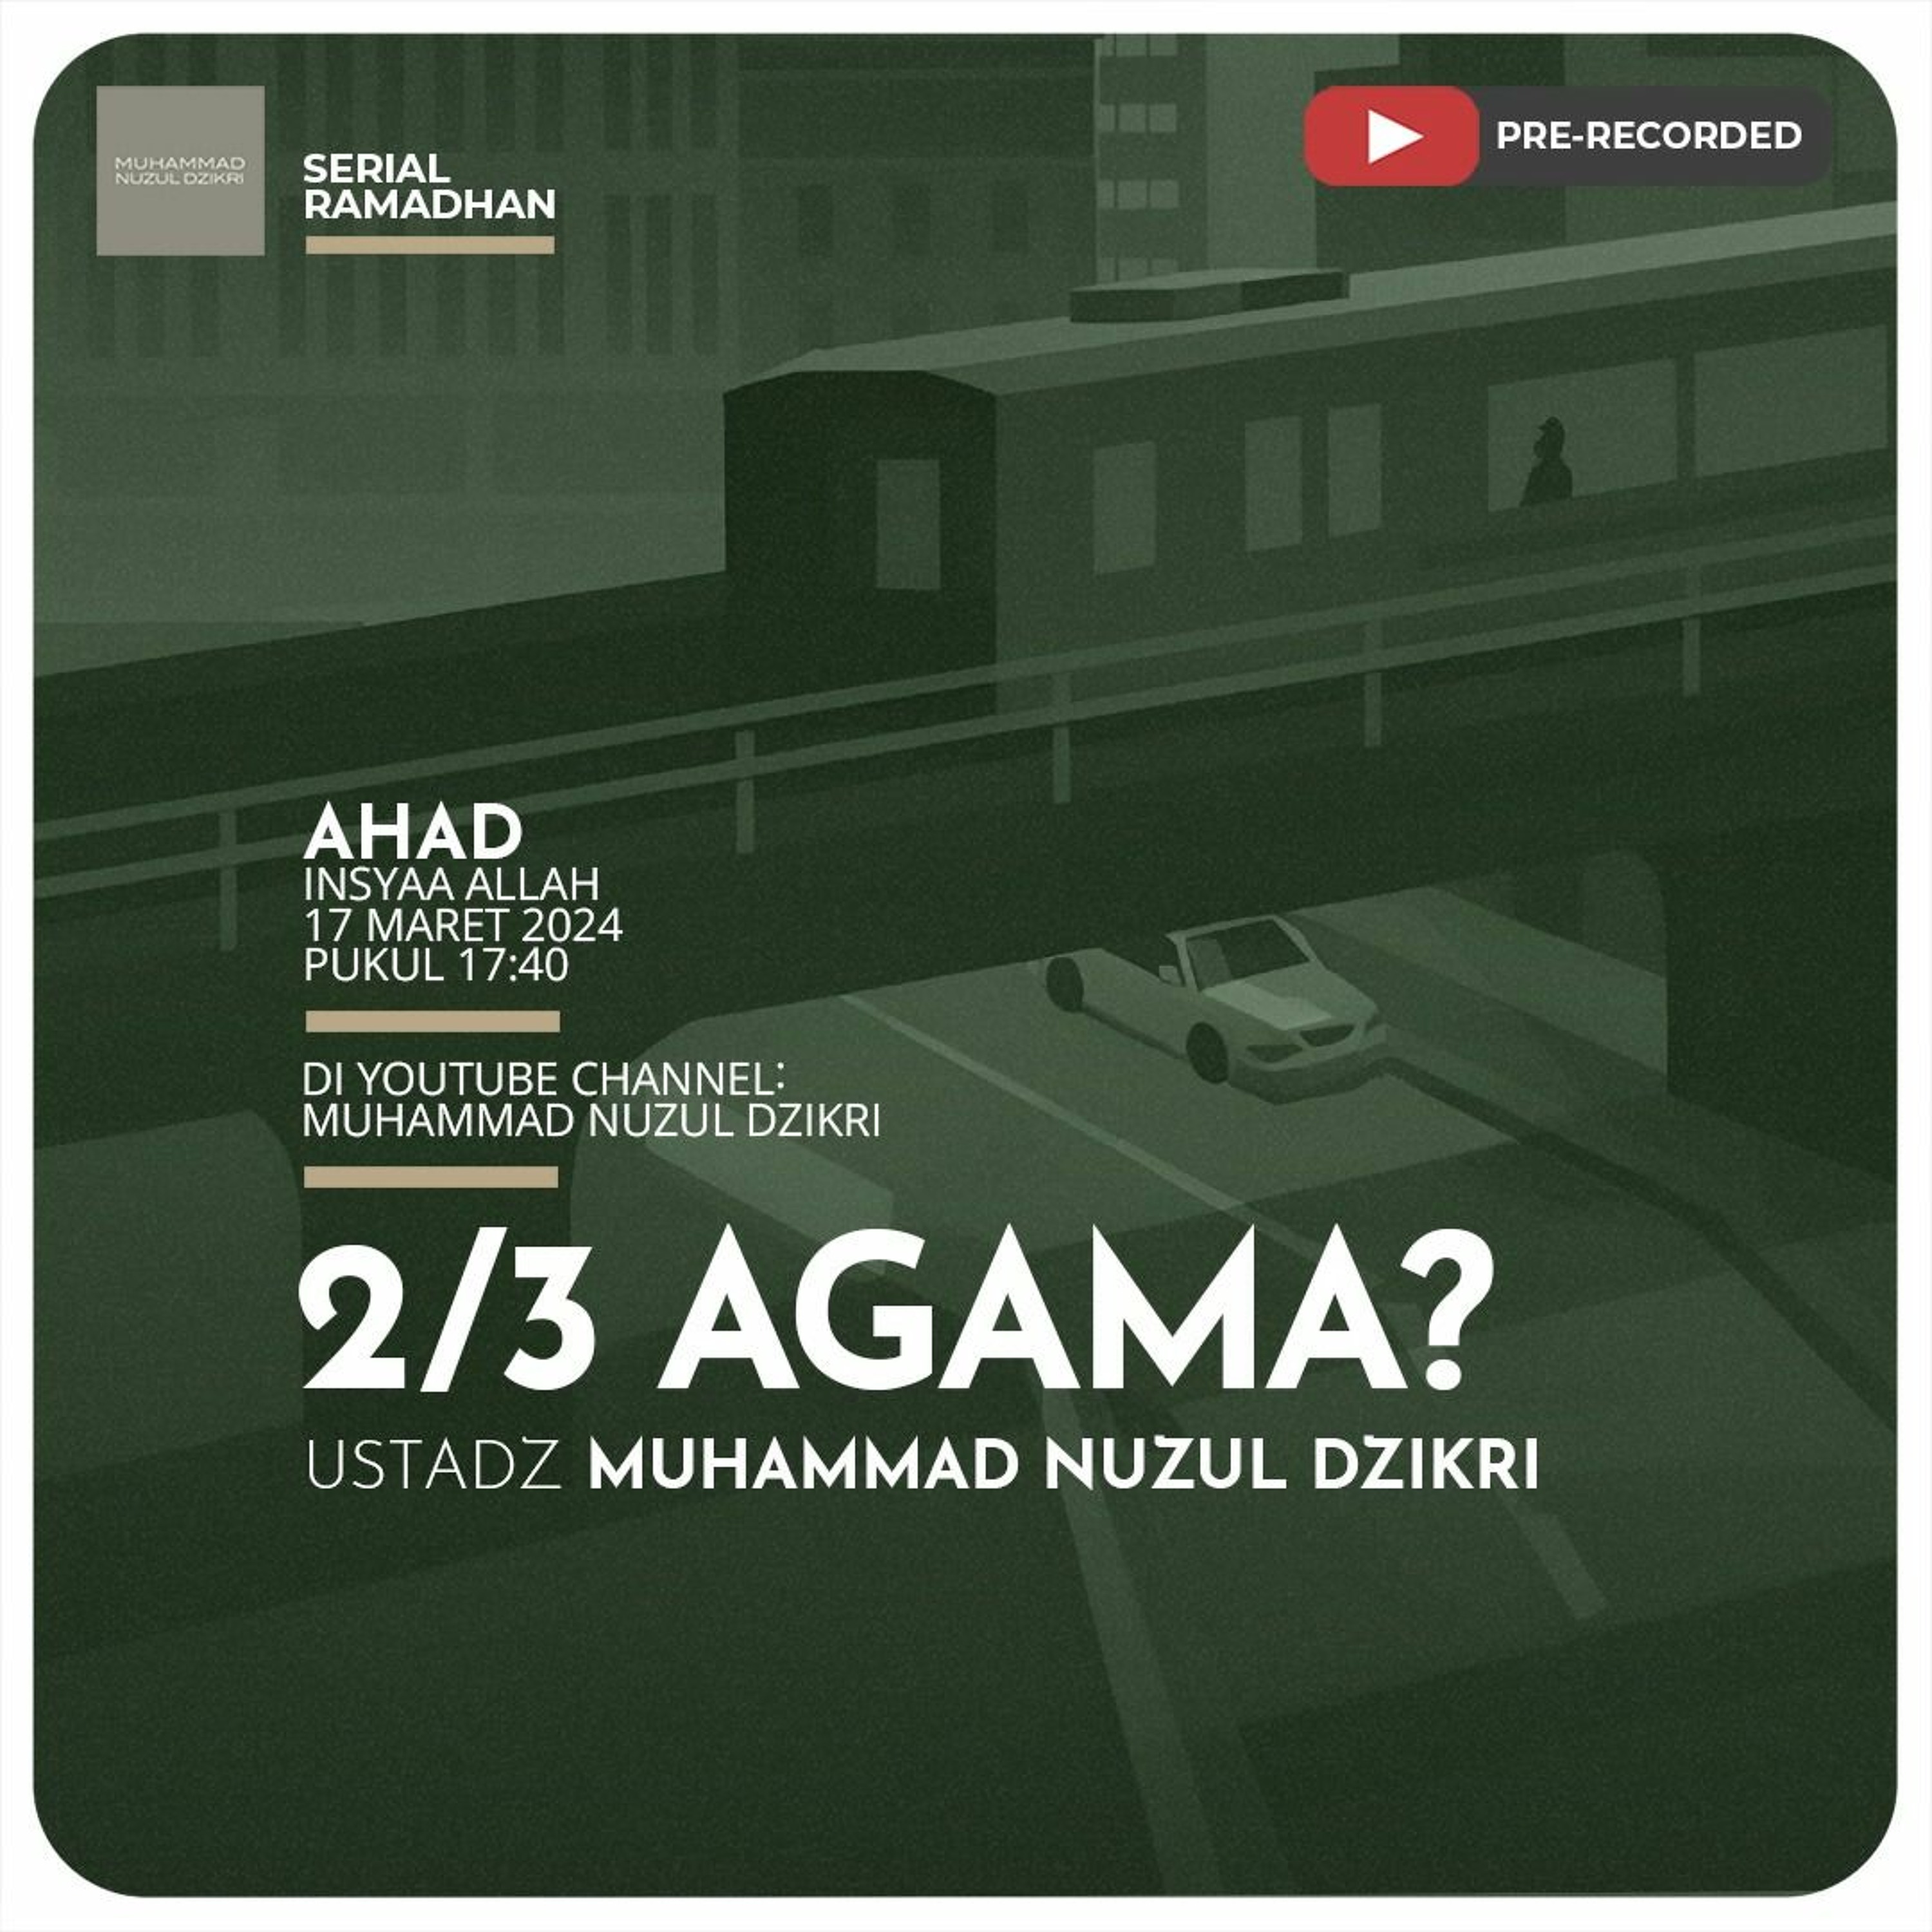 Serial Ramadhan 06. ”2/3 AGAMA” - Ustadz Muhammad Nuzul Dzikri